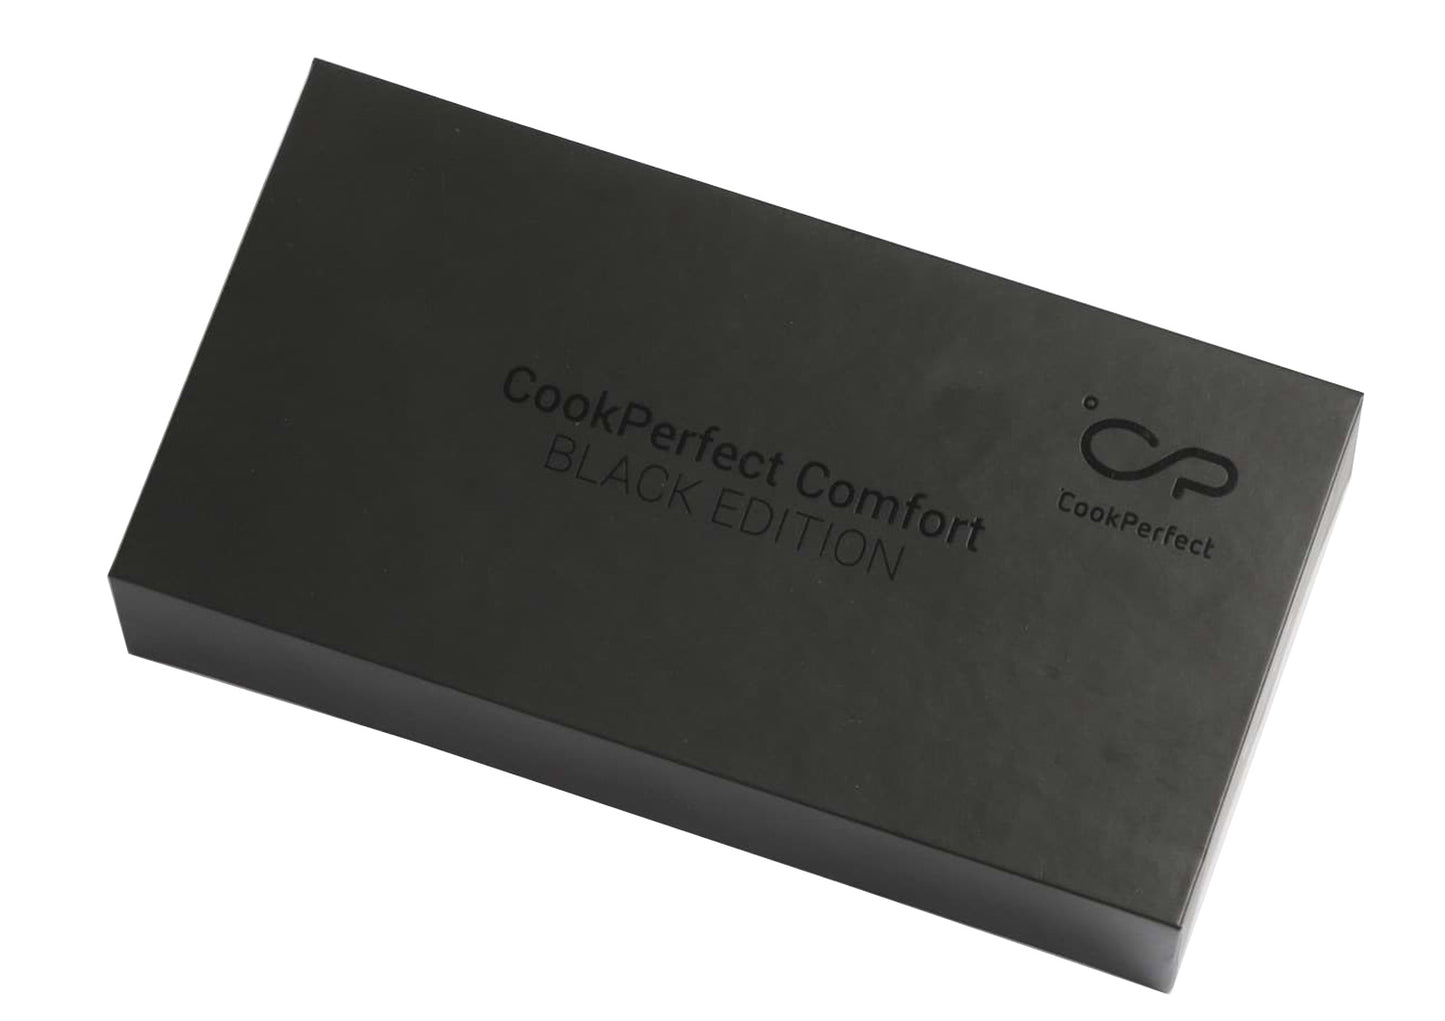 COOKPERFECT COMFORT BLACK EDITION